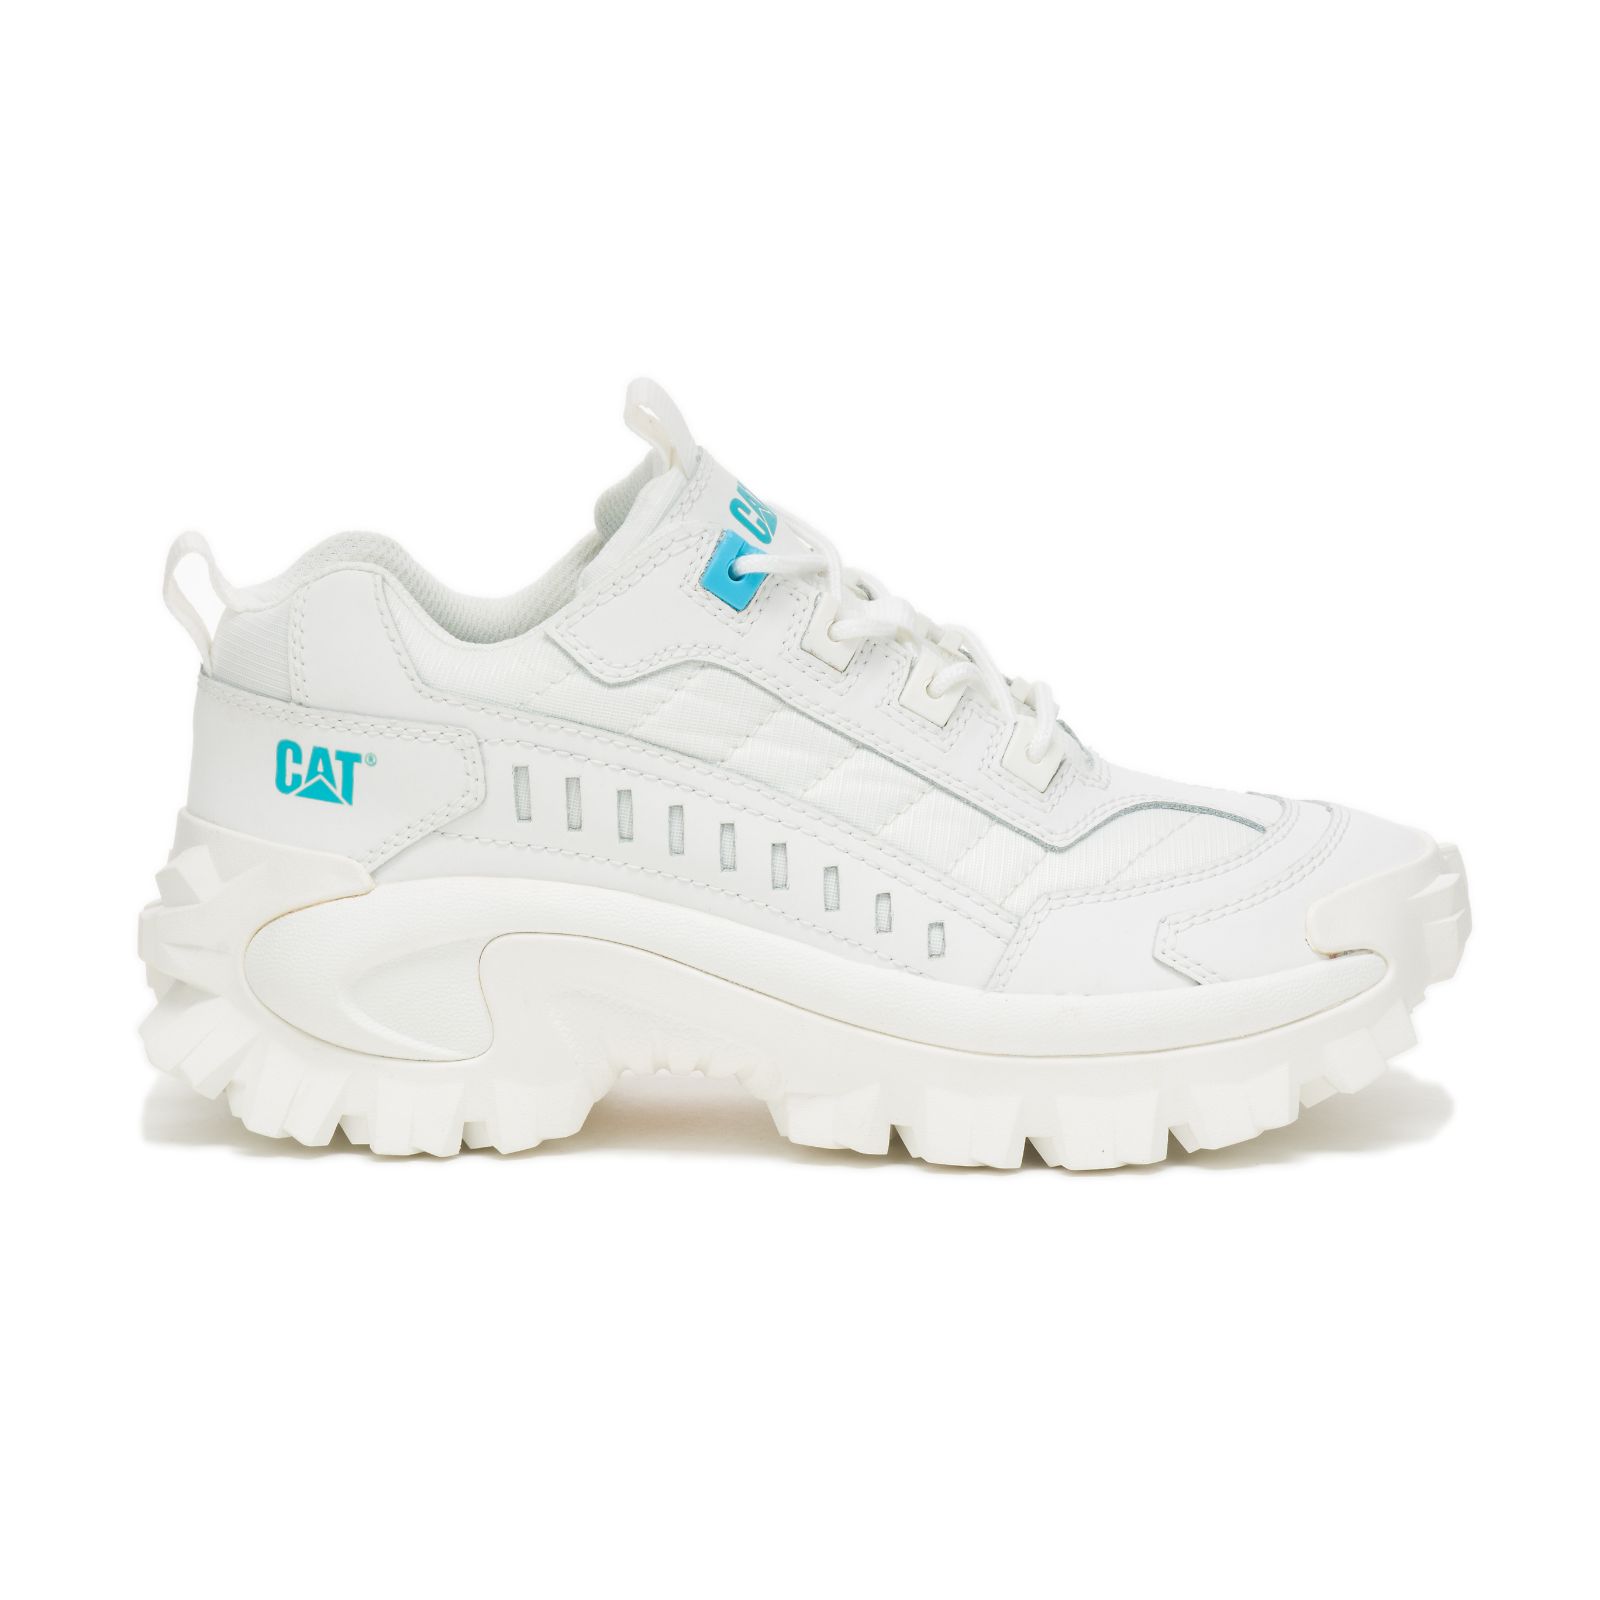 Caterpillar Casual Shoes Dubai - Caterpillar Intruder Womens - White/Blue SNGDJR389